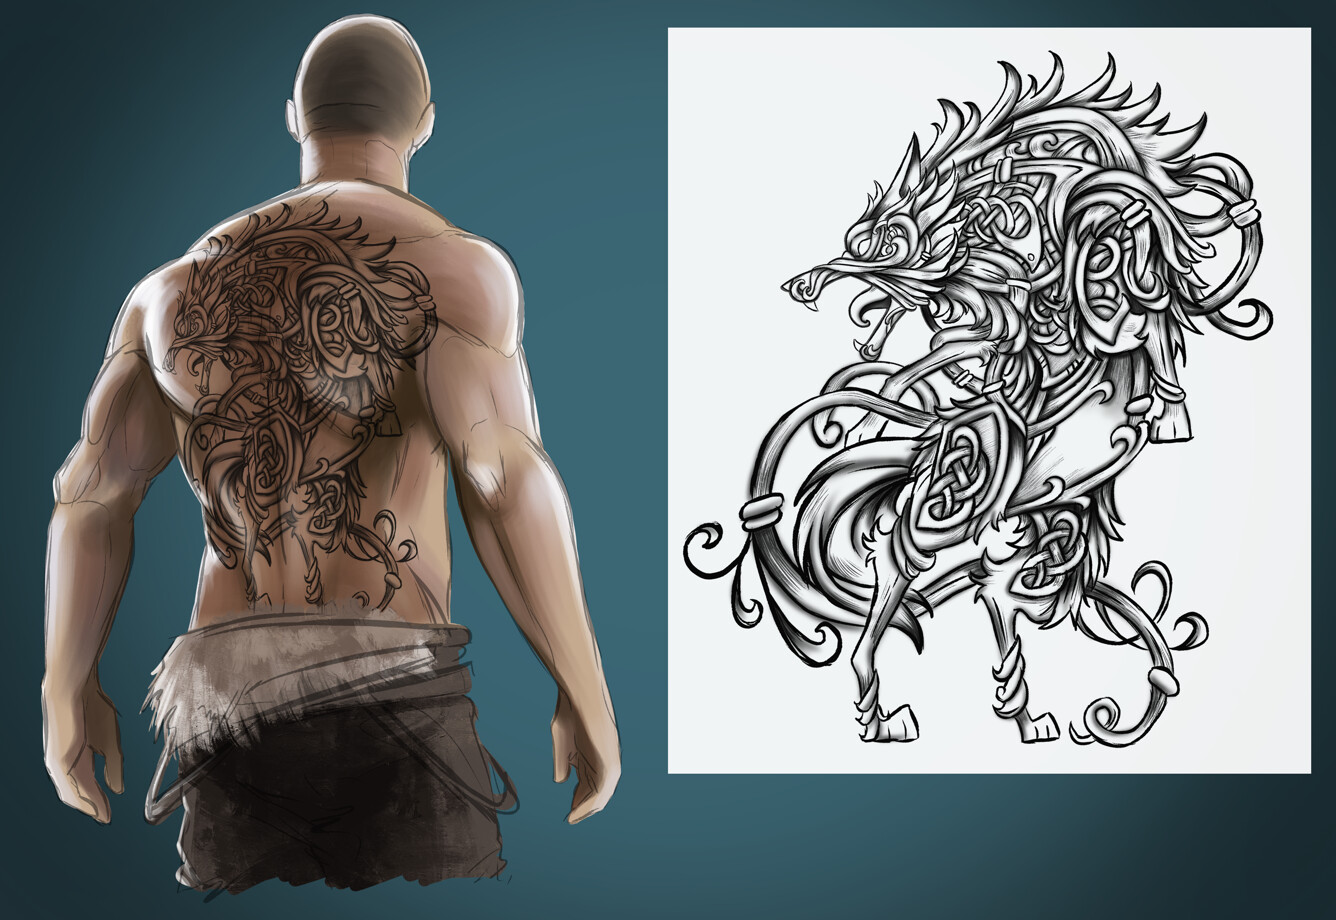 Assassins Creed Themed Tattoo Ideas  RPG Informer